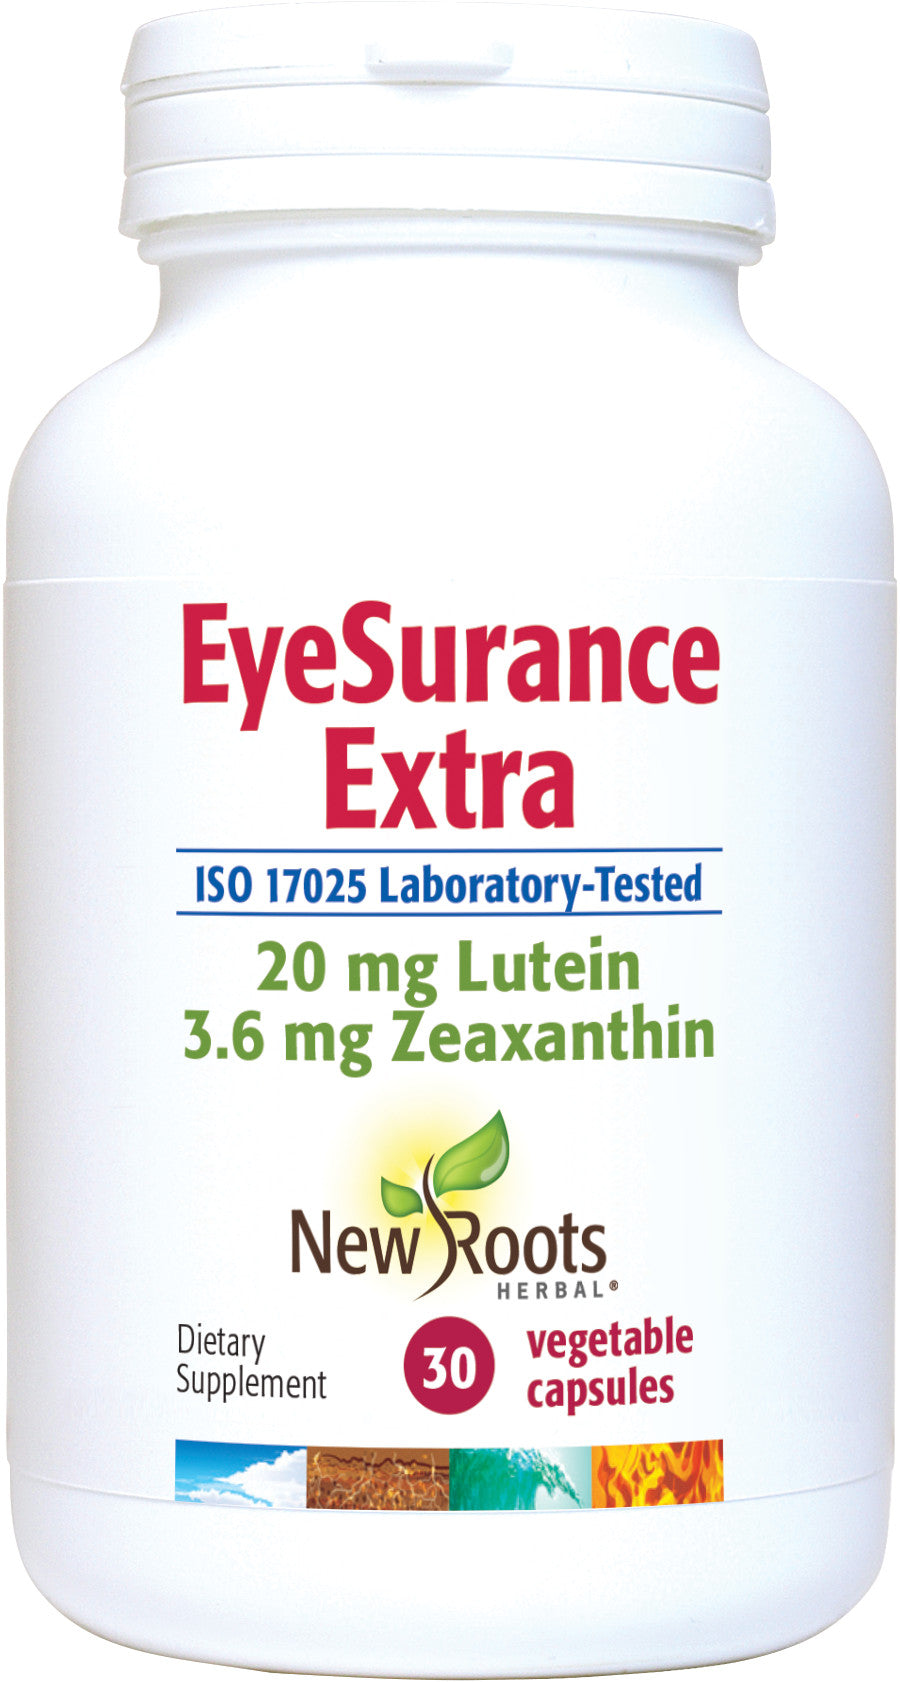 EyeSurance Extra Multi Vitamin (30 Vegetable Capsules) - Zeaxanthin Supplement